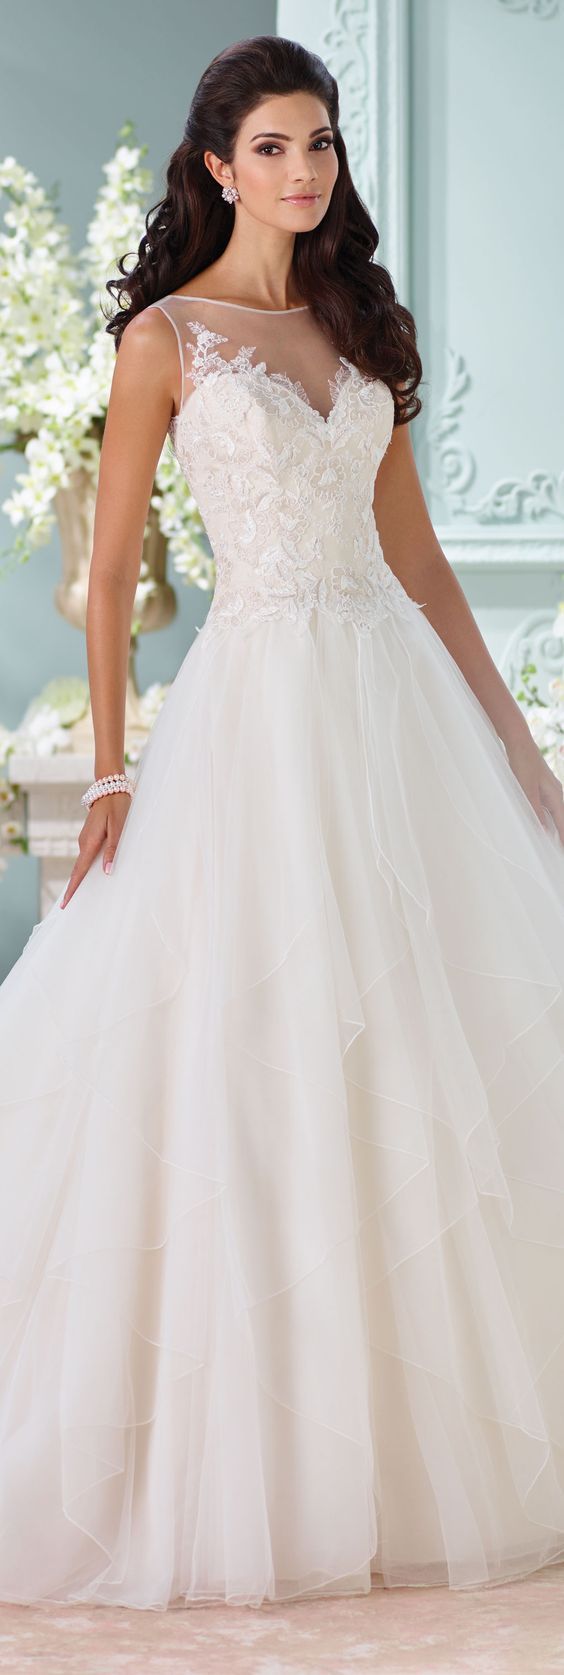 Wedding - Sleeveless Wedding Gown